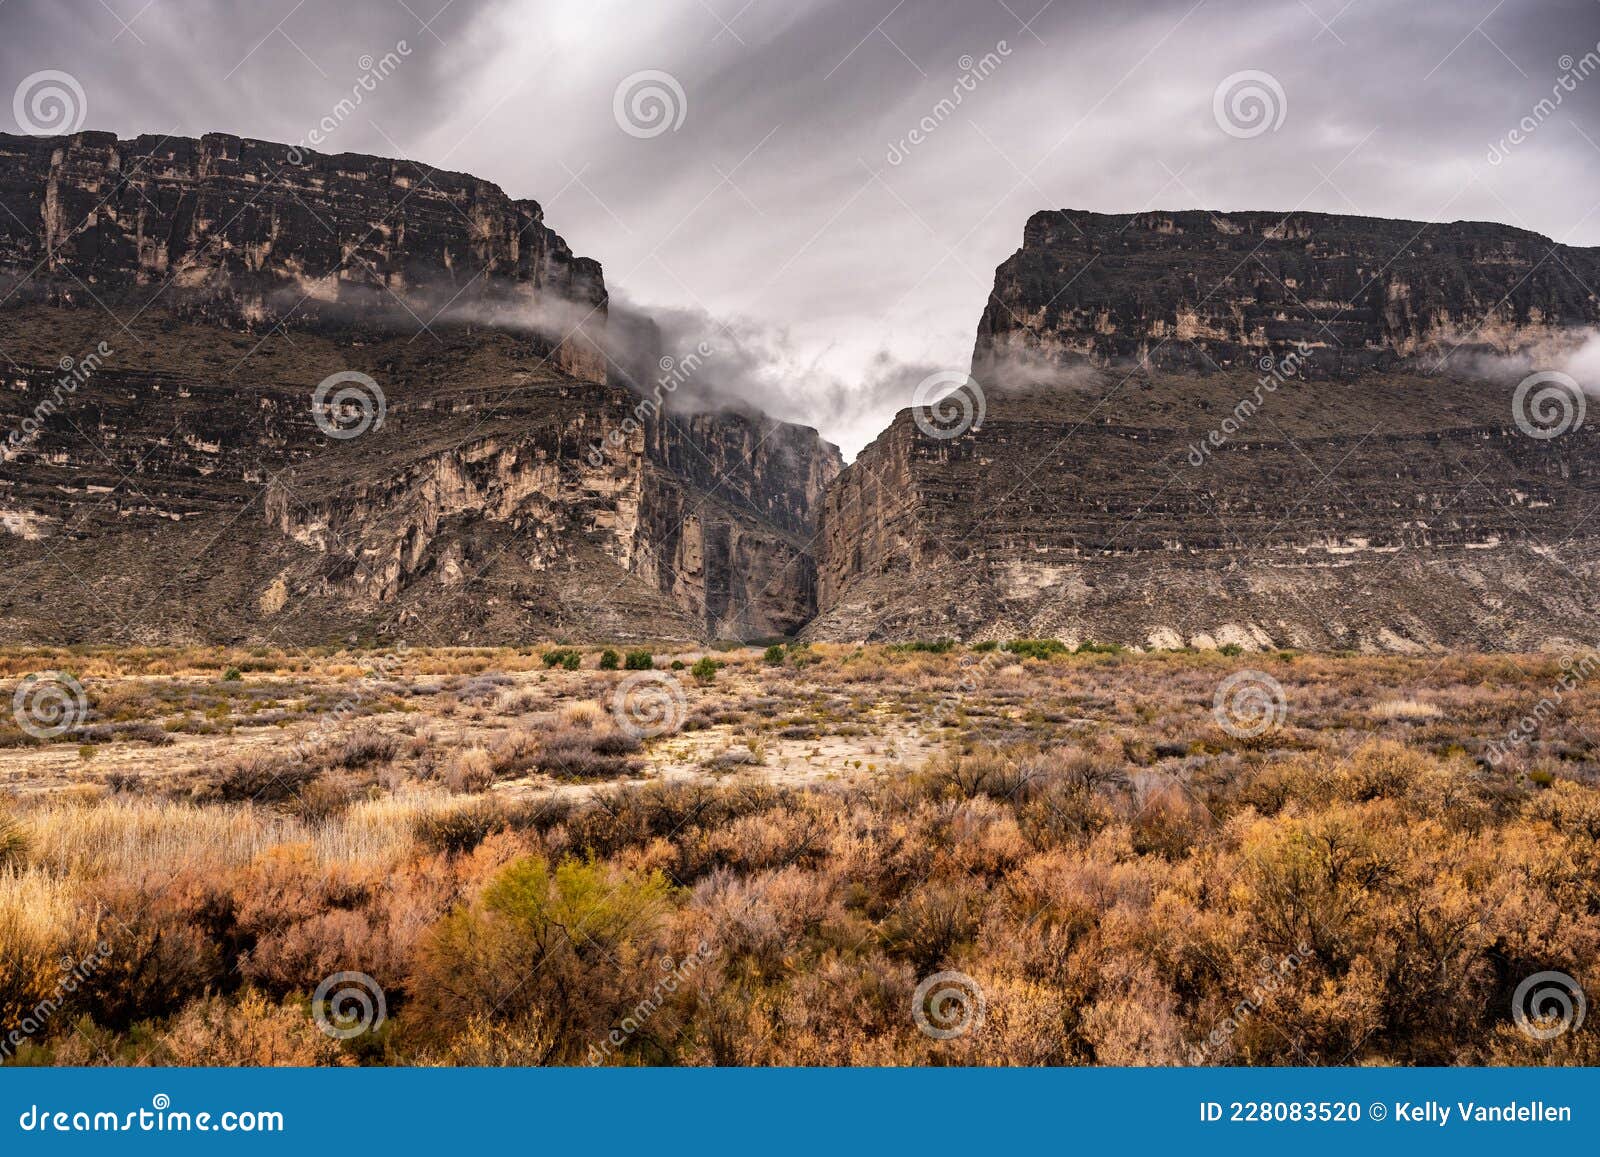 brown valley below santa elena canyon